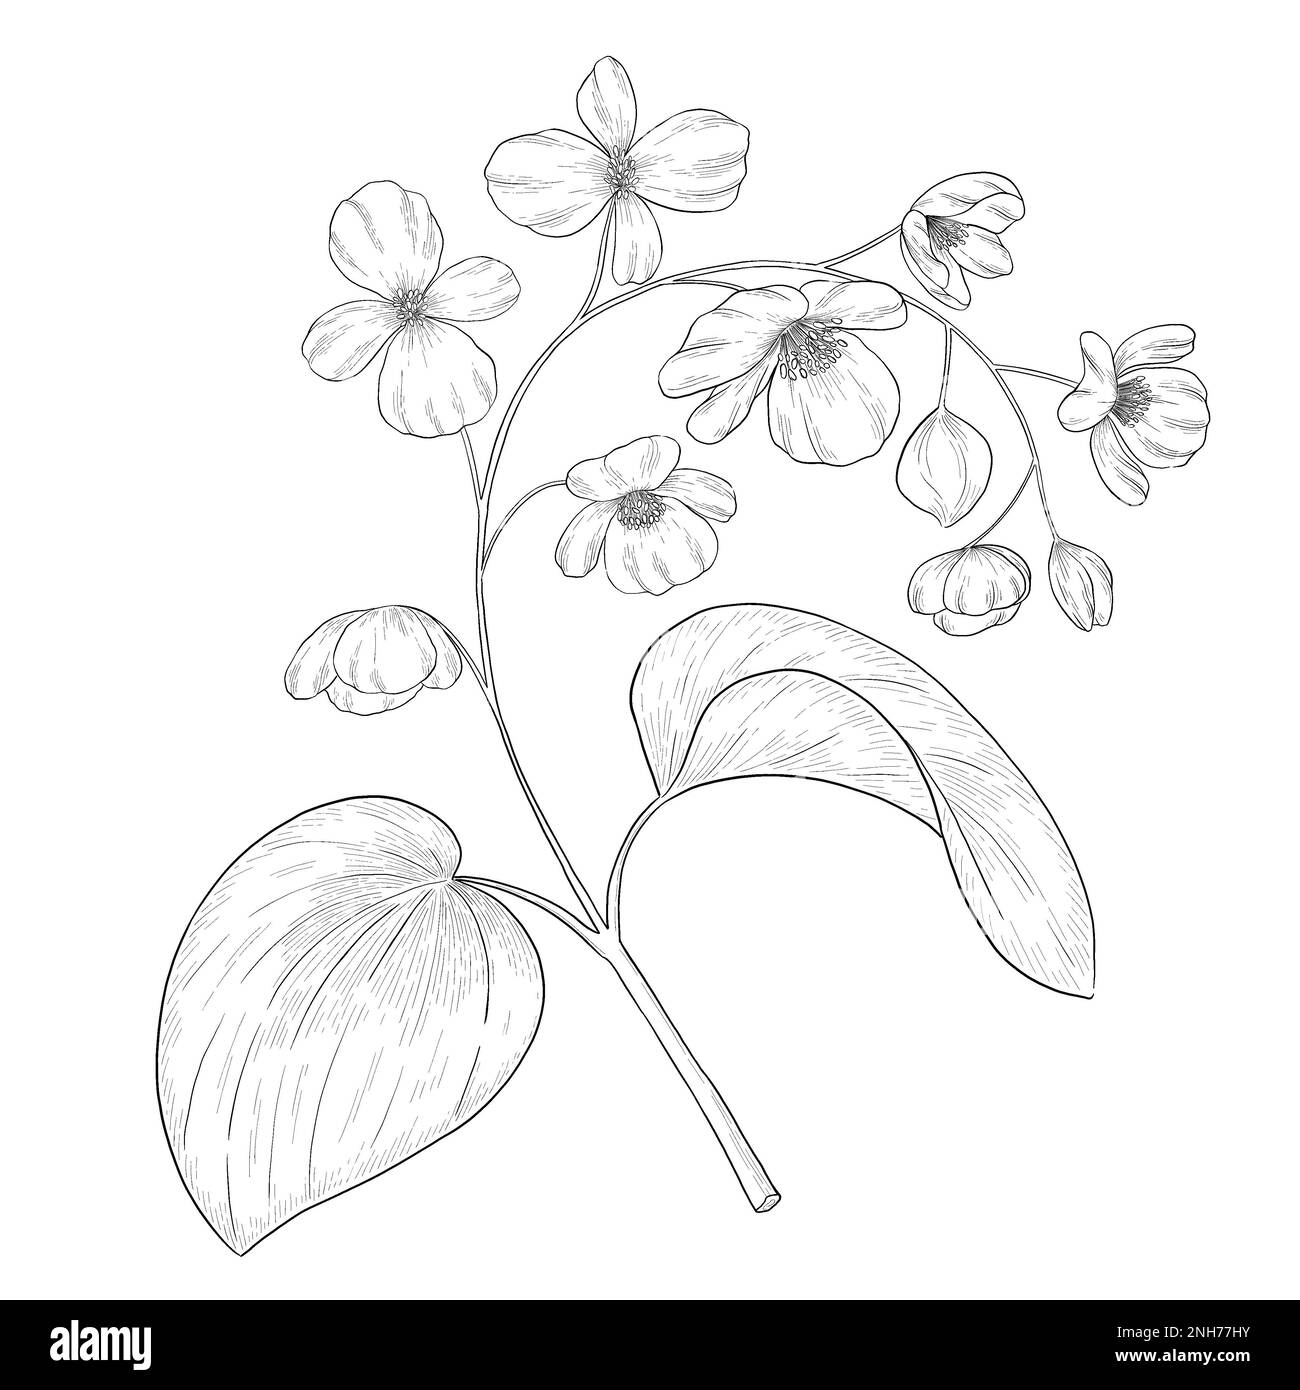 Begonia outline botanical illustration. Line art digitally drawn illustrations. Stock Photo